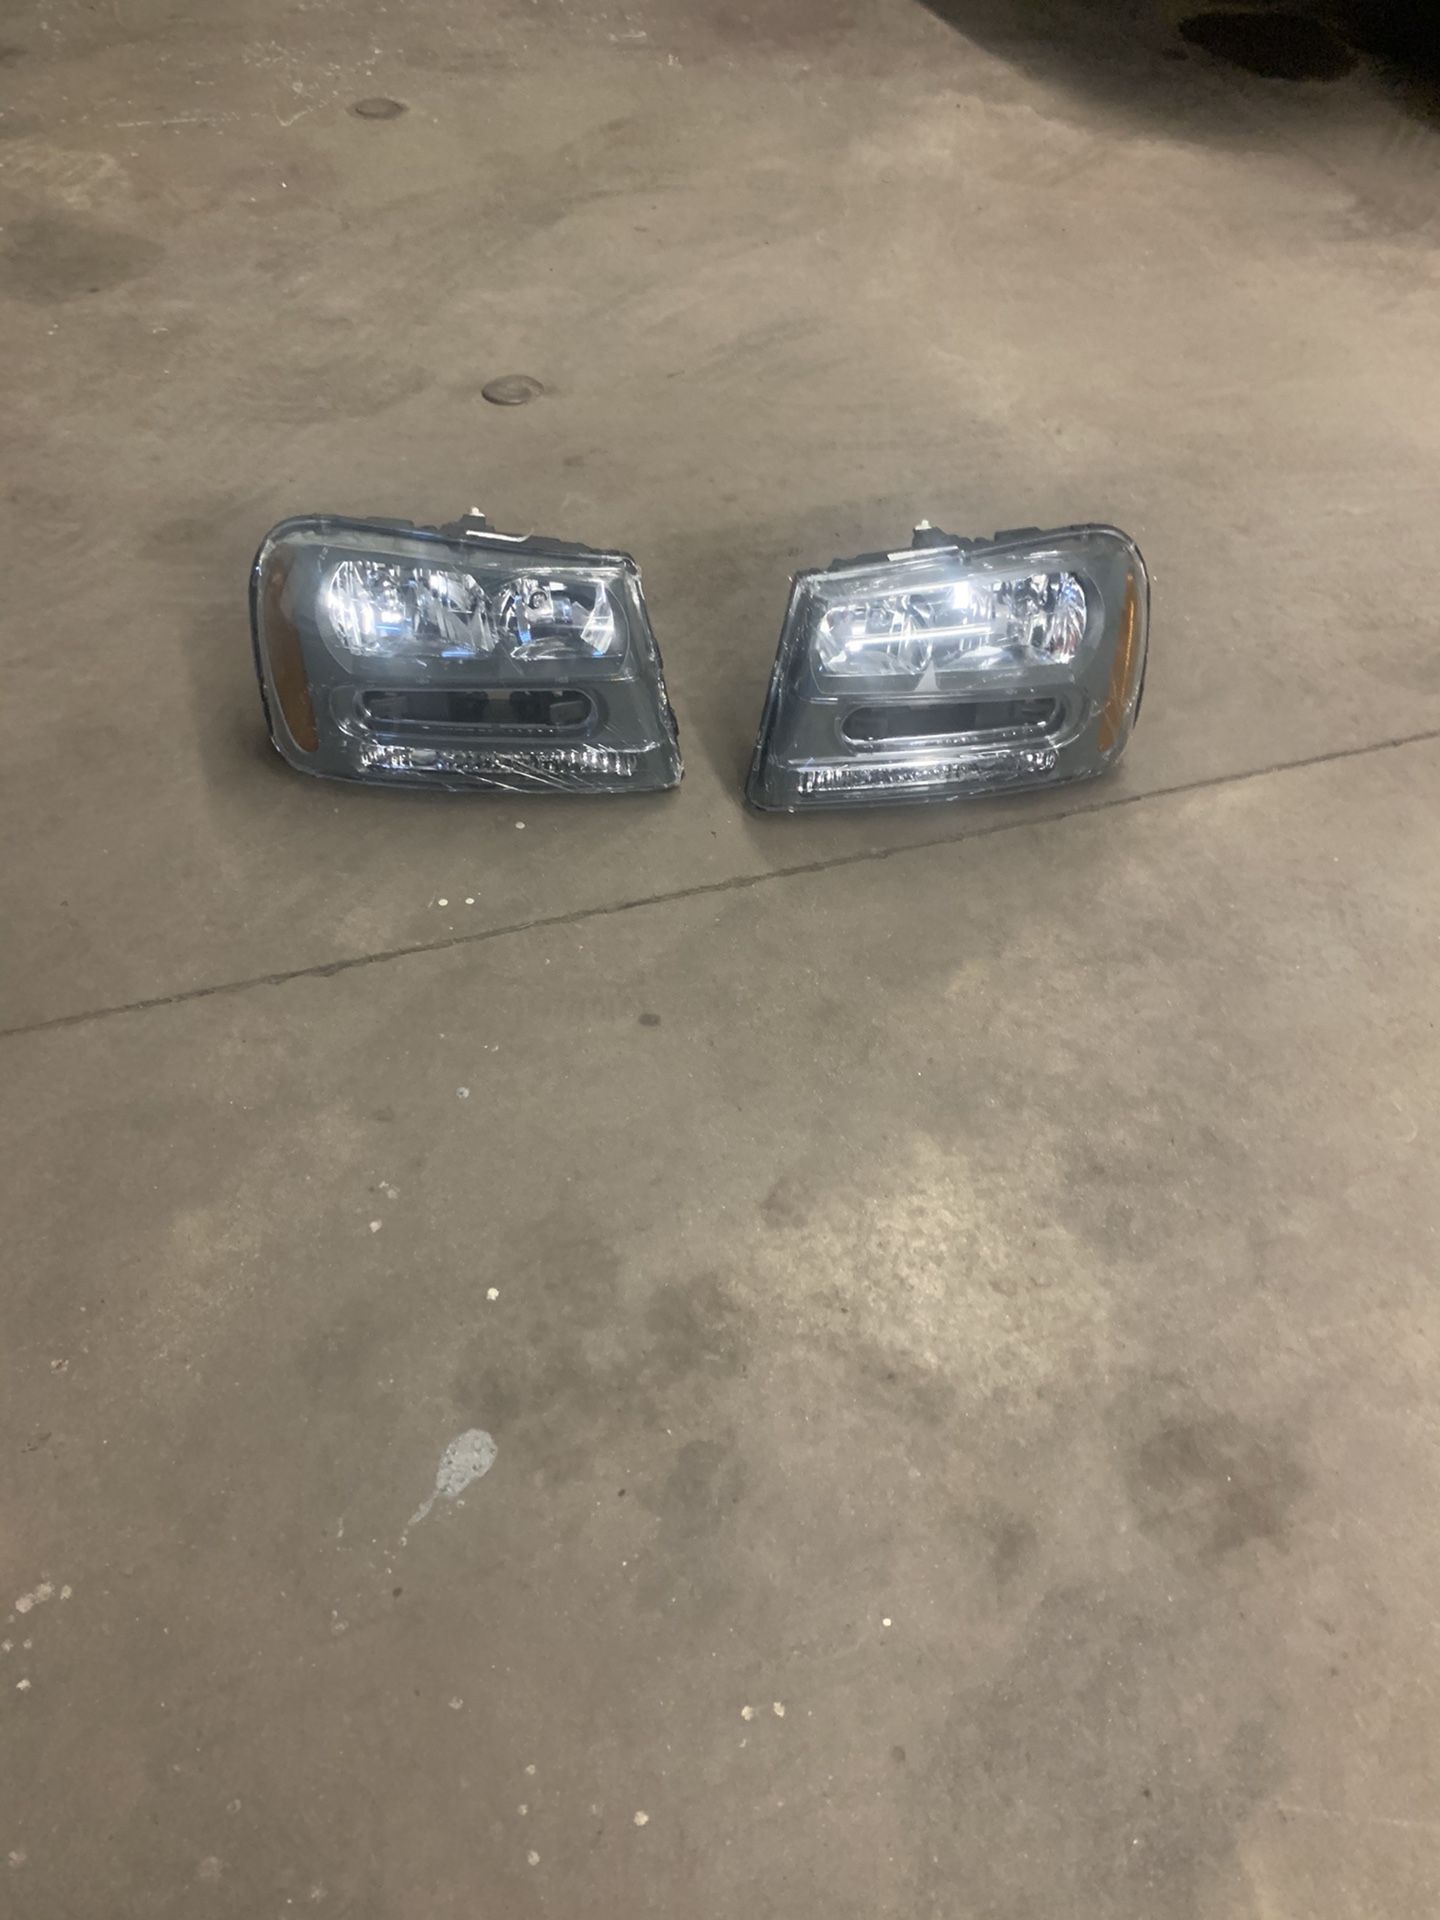 Brand New Headlights for Chevy Trailblazer $80